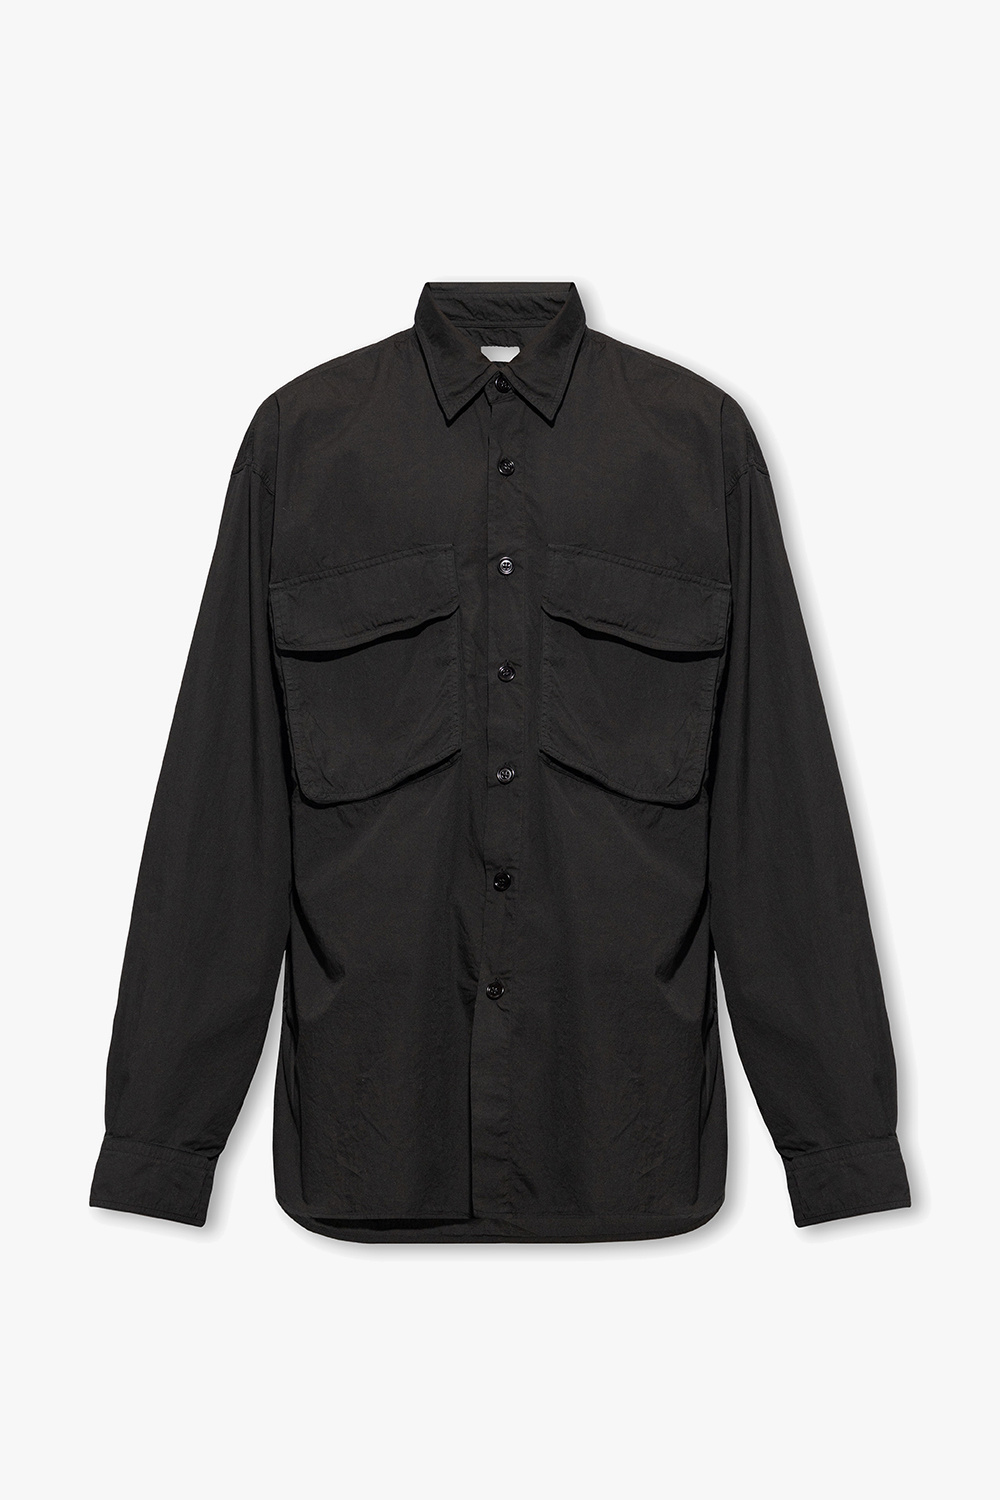 Dries Van Noten Shirt with pockets | Men's Clothing | Vitkac